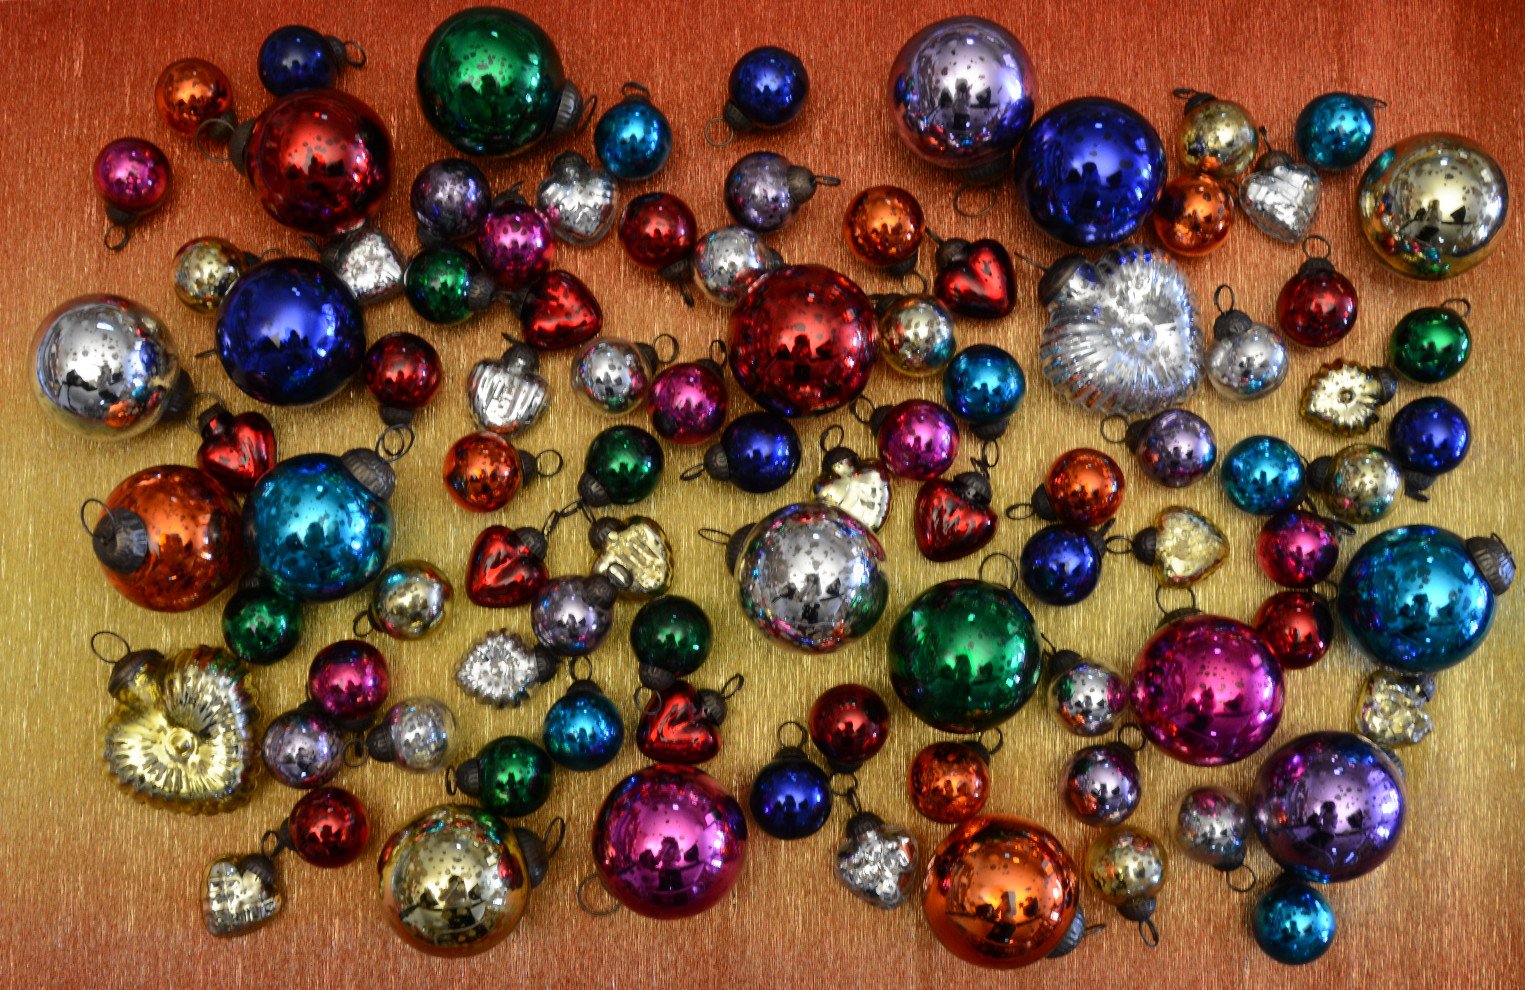 6 Pack | 1.5-Inch Fuchsia Ava Mini Mercury Handcrafted Glass Balls Ornaments Christmas Tree Decoration